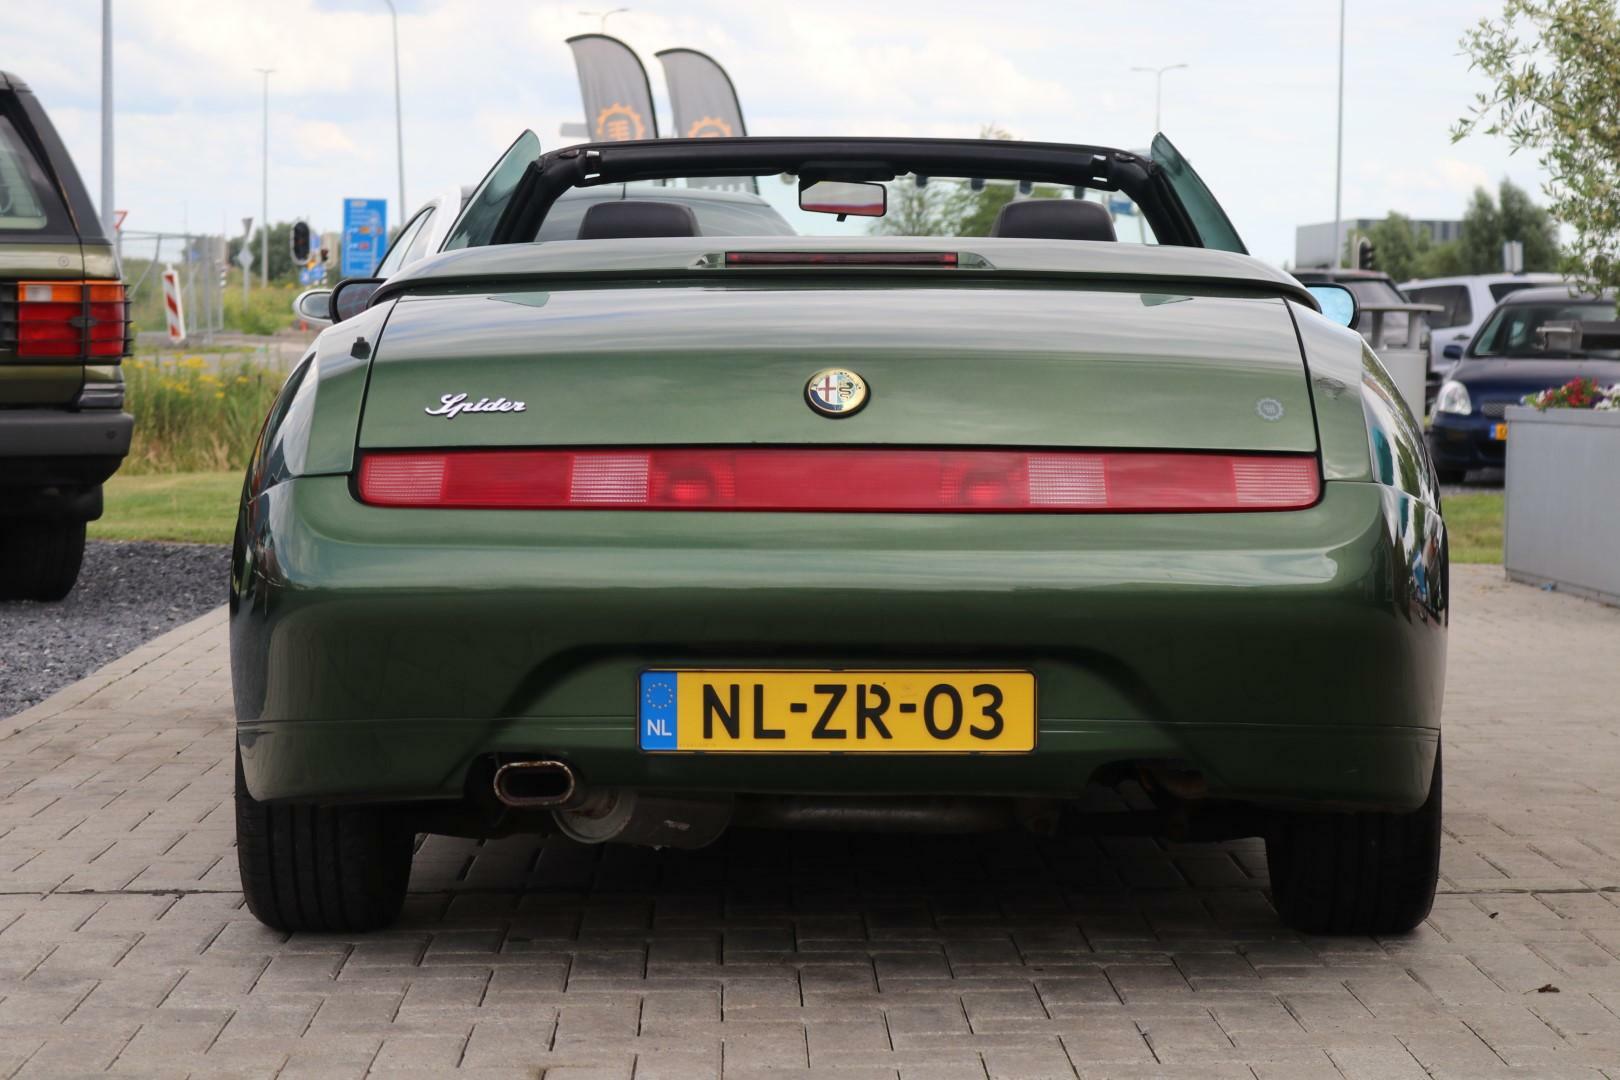 Caroutlet Groningen - Alfa Romeo Spider 2.0-16V T.Spark | NAP | MOOIE STAAT | BEIGE KAP